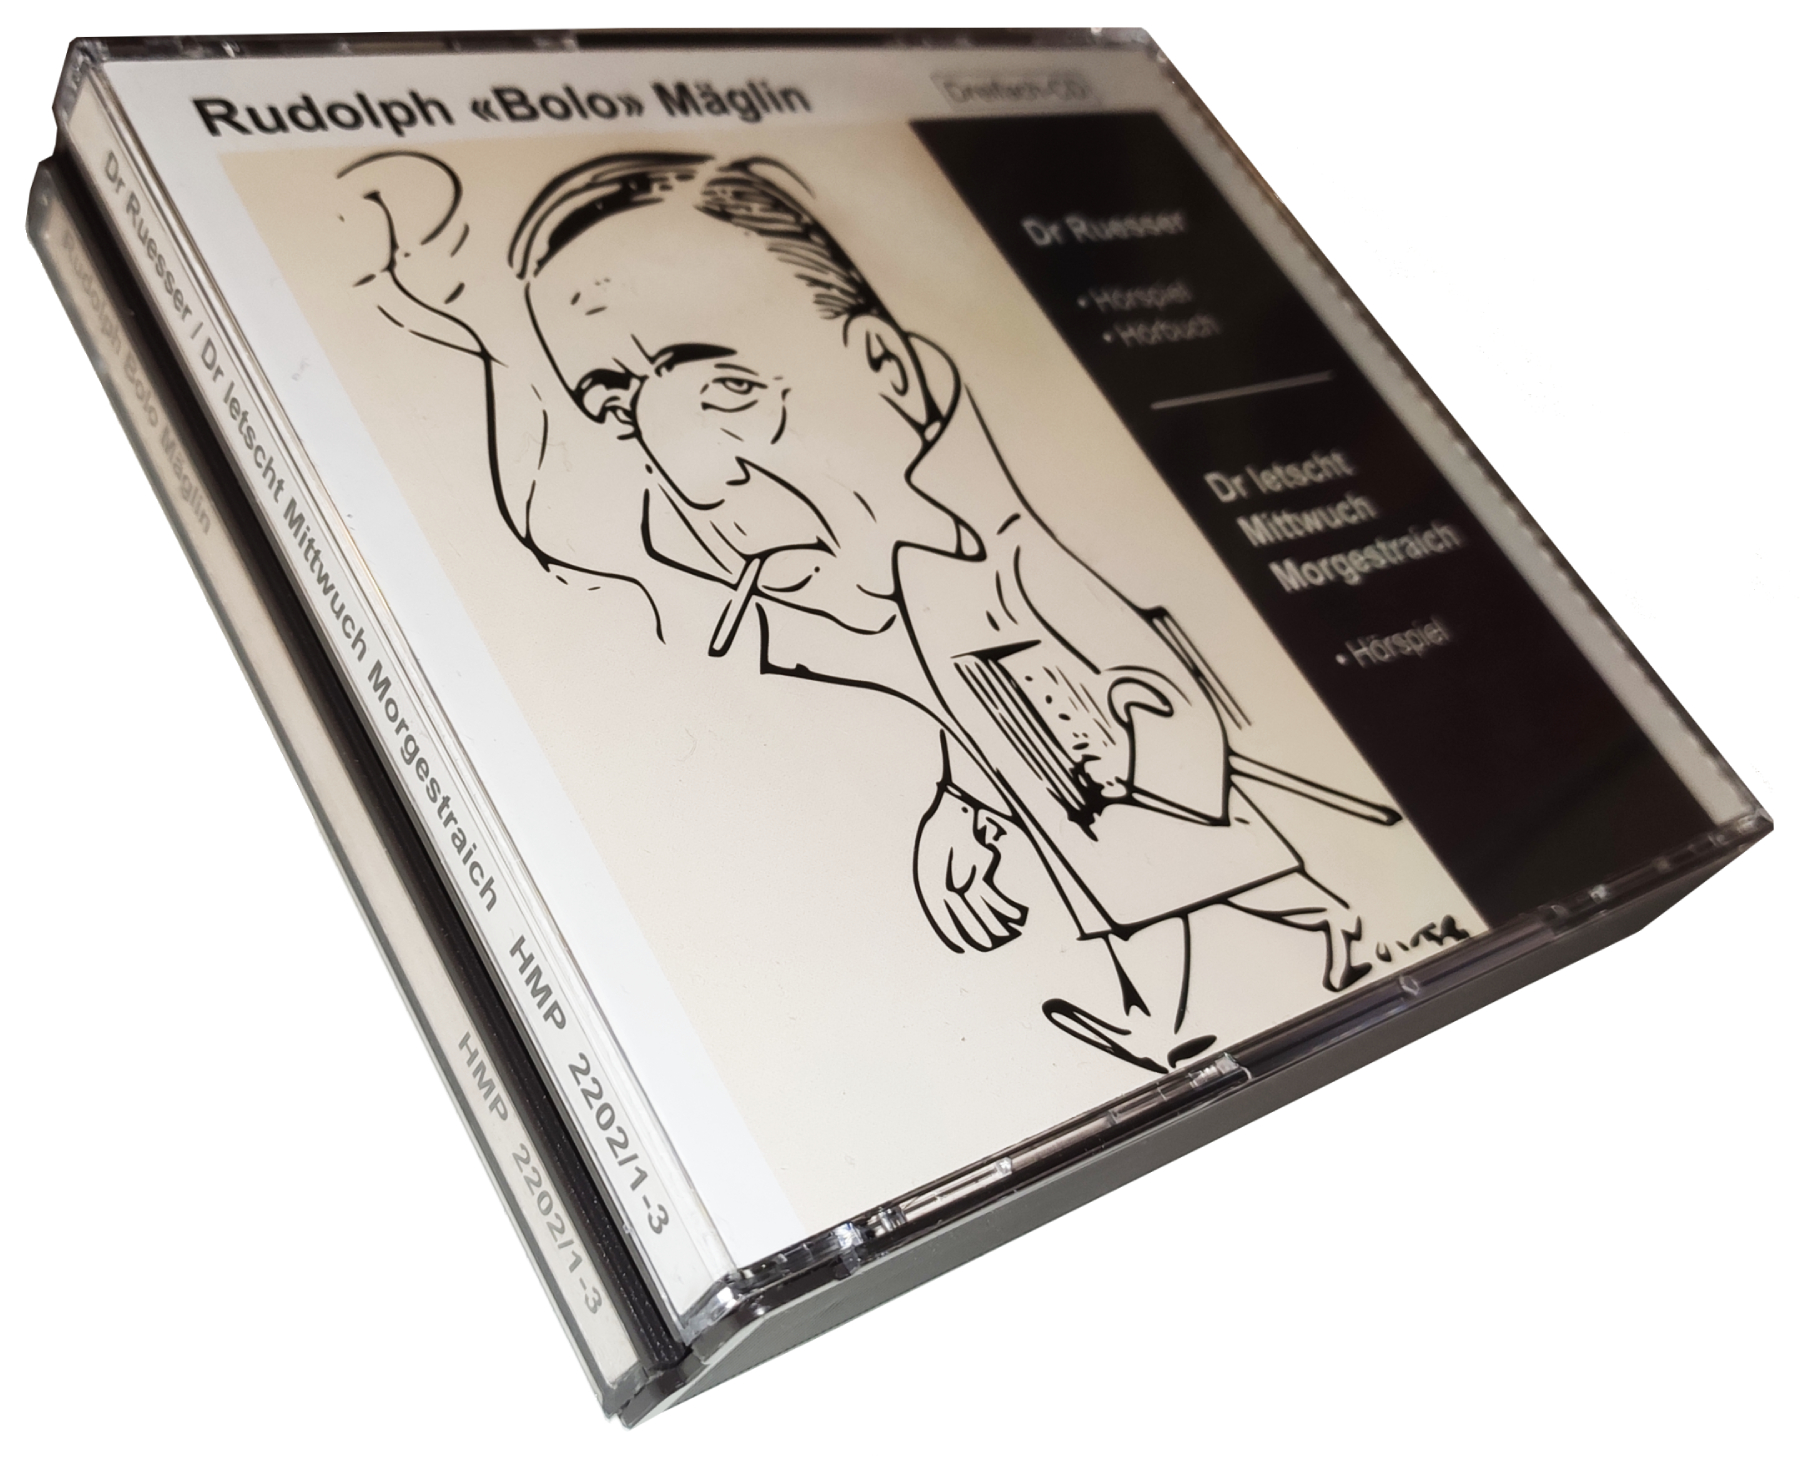 Das Endprodukt der 3-fach-CD "Rudolph «Bolo» Mäglin"